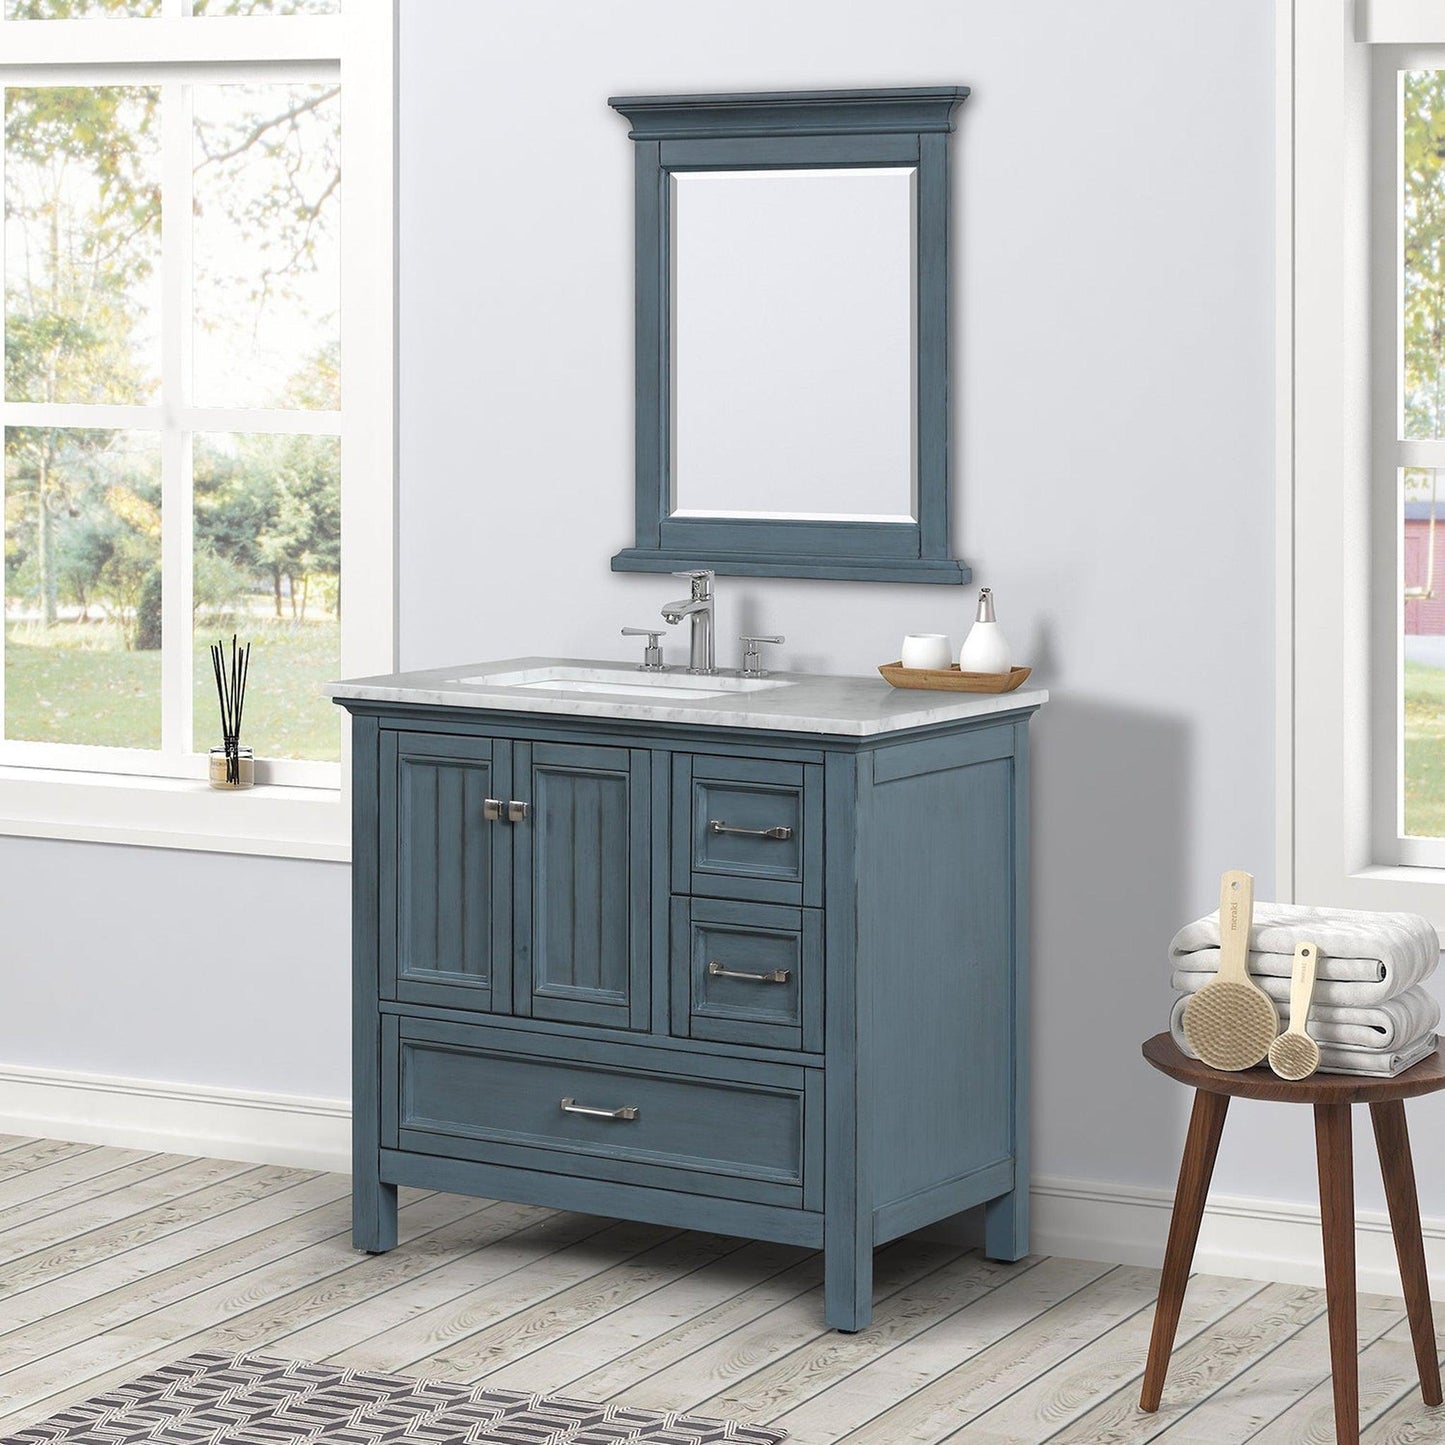 Eviva Britney 36" x 34" Ash Blue Freestanding Bathroom Vanity With Carrara Marble Countertop and Single Undermount Ceramic Sink